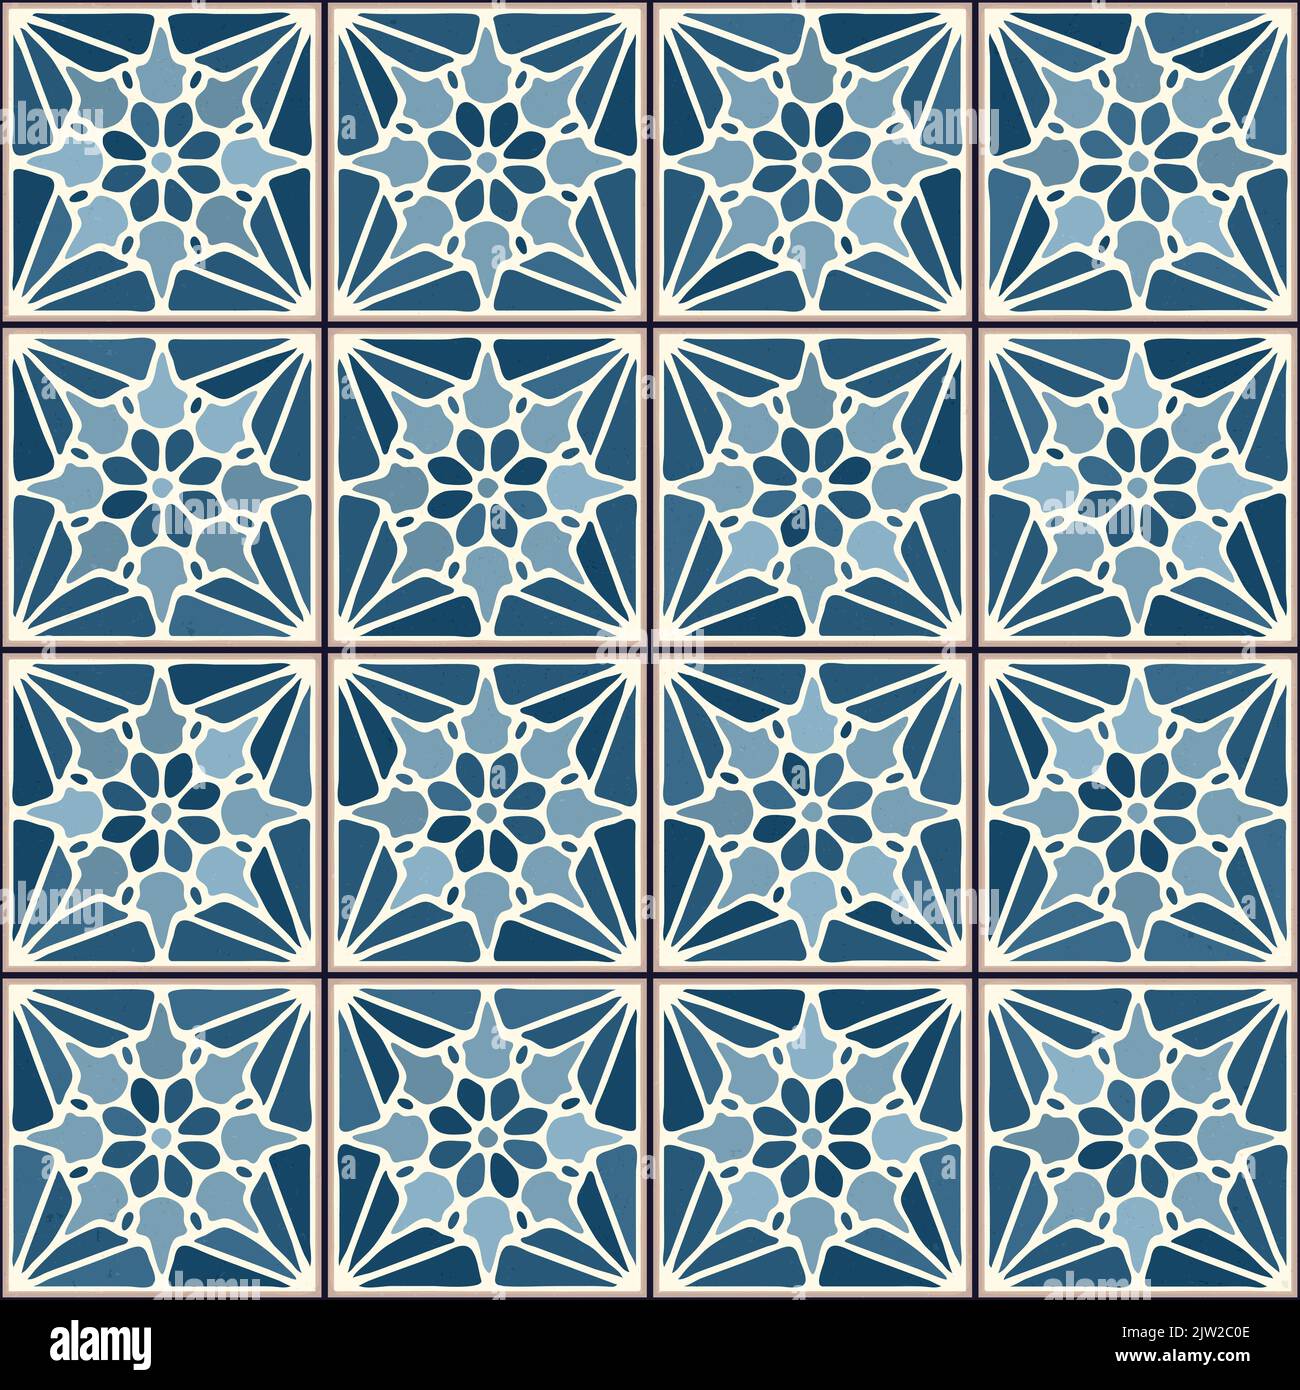 Vintage ceramic tiles vector pattern Stock Photo